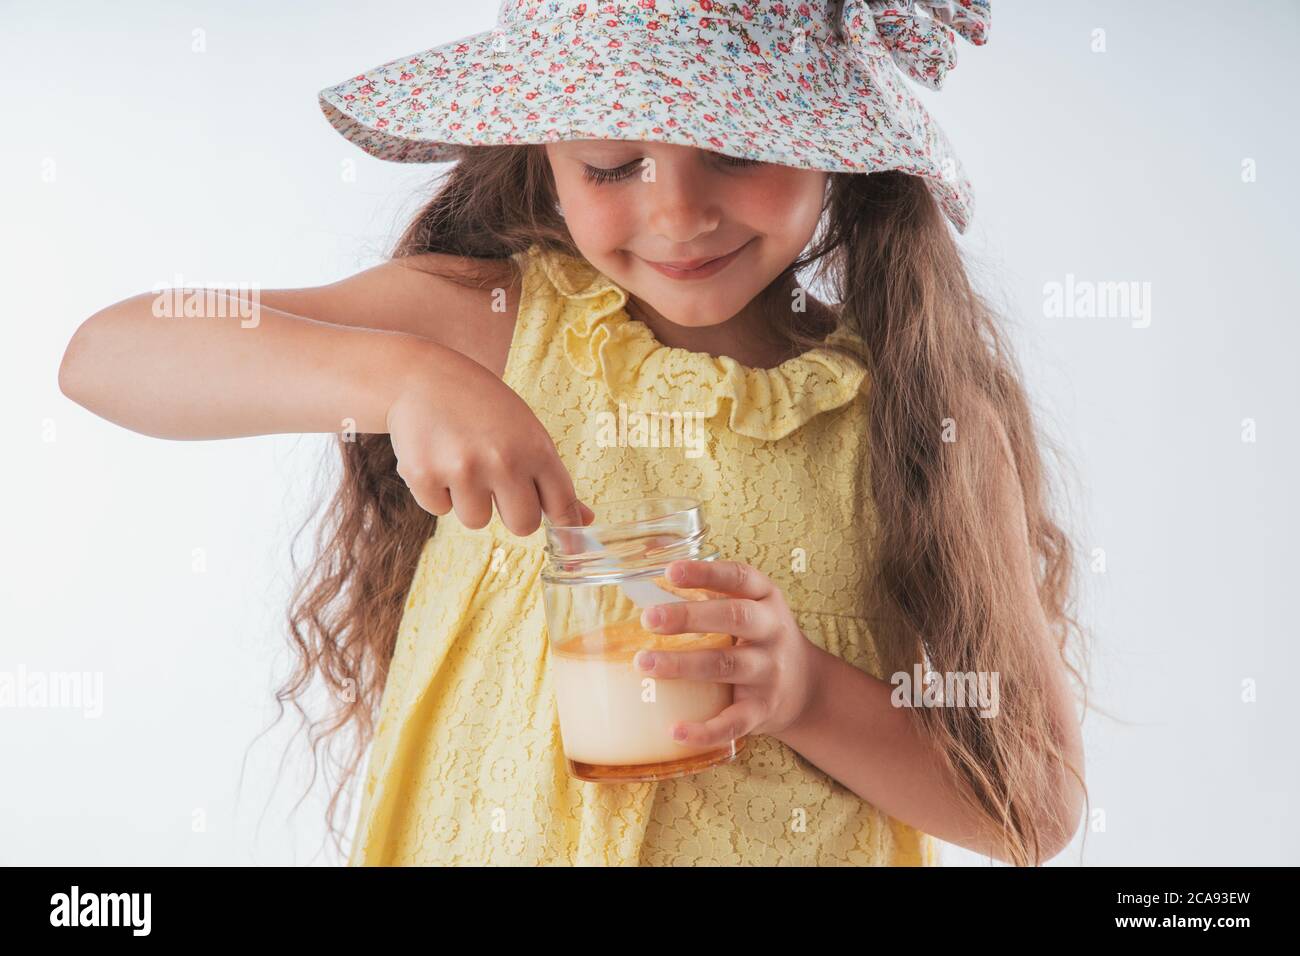 Beautiful little girl eating tasty cream dessert portrait isolated on white background Stock Photo